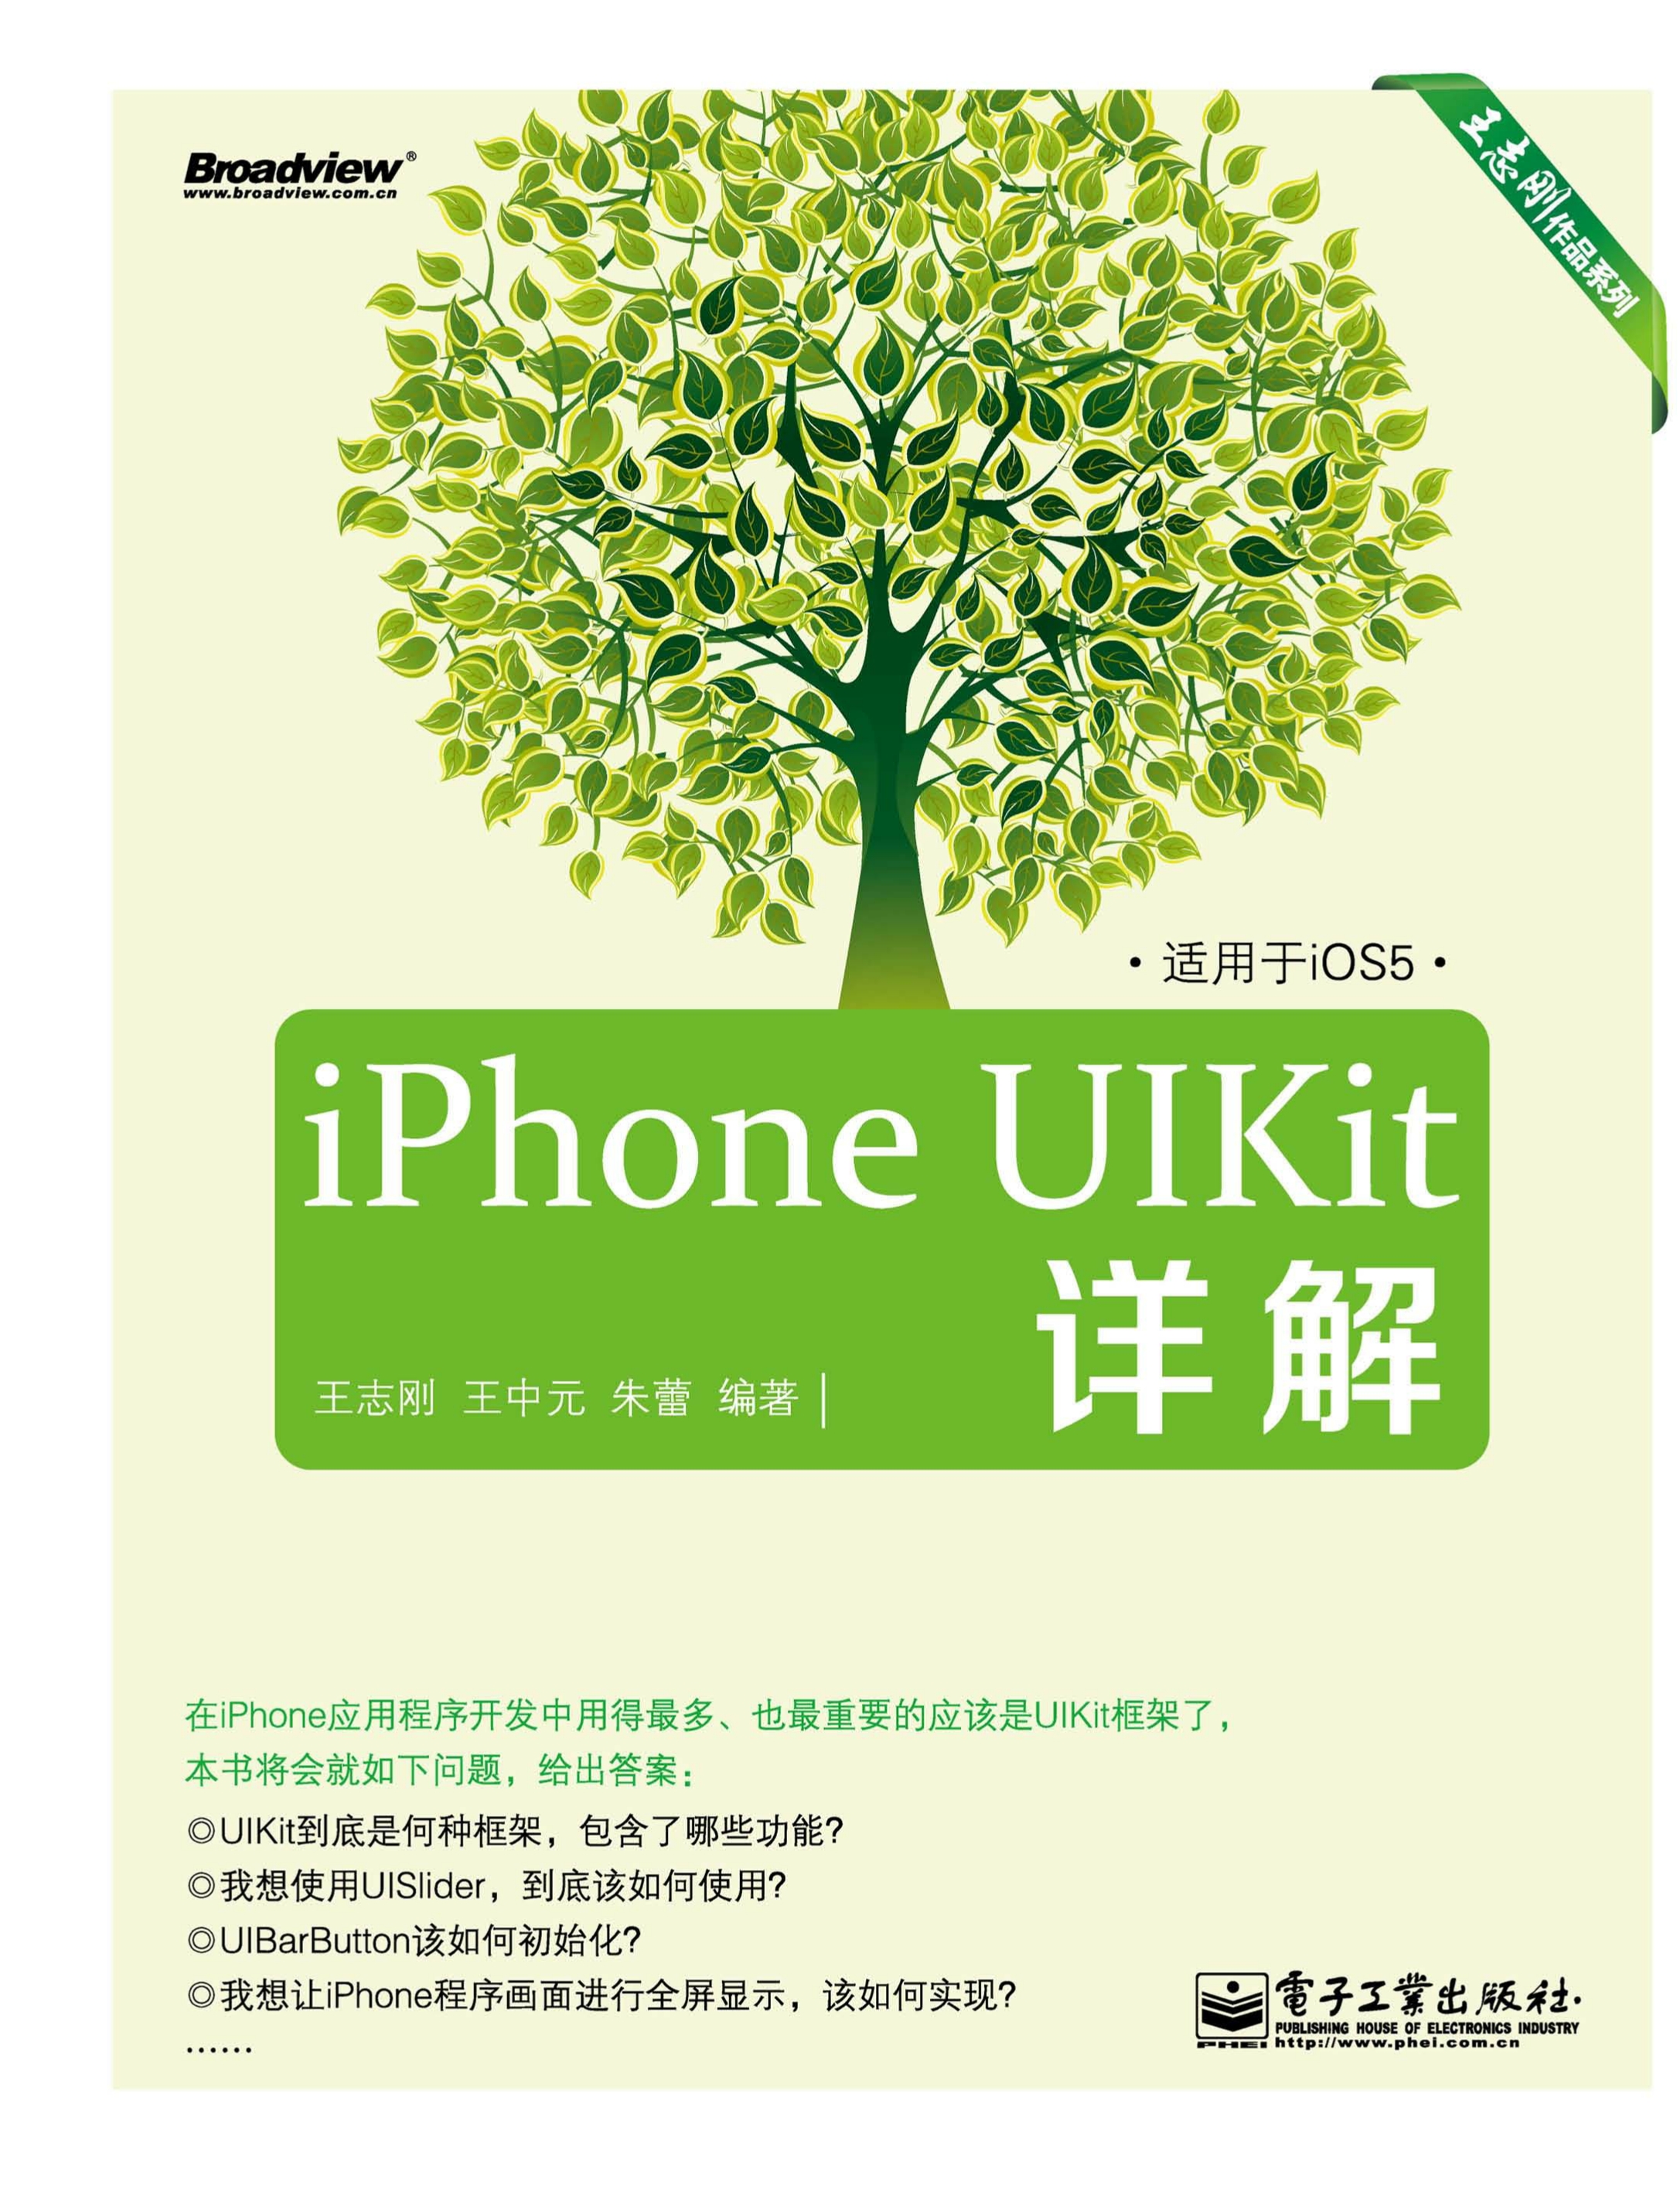 iPhone UIKit详解-- 王志刚，王中元，朱蕾-京东阅读-在线阅读